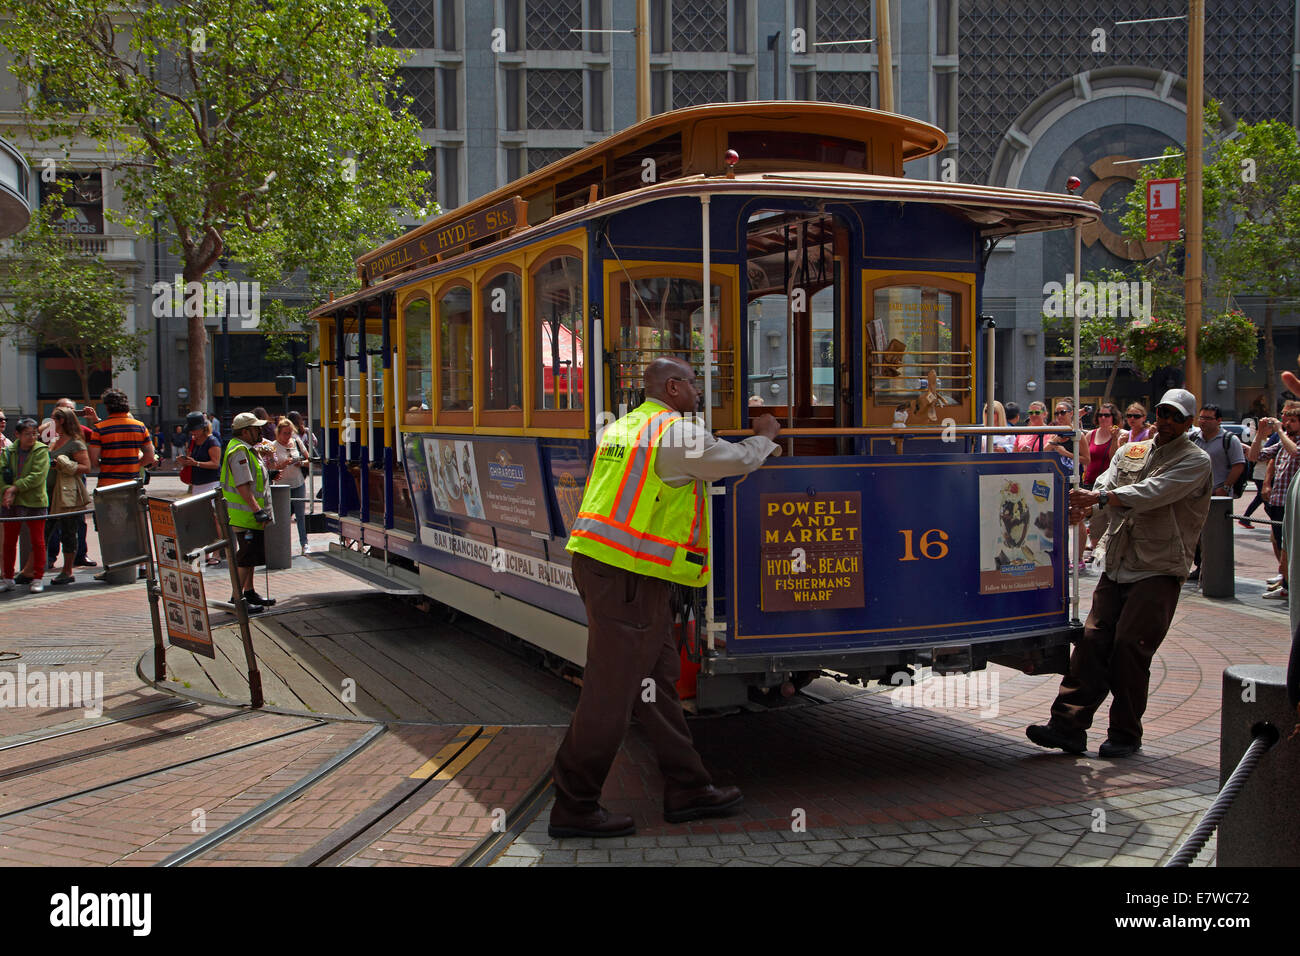 Cable car on turntable, Powell Street, San Francisco, California, USA Stock Photo